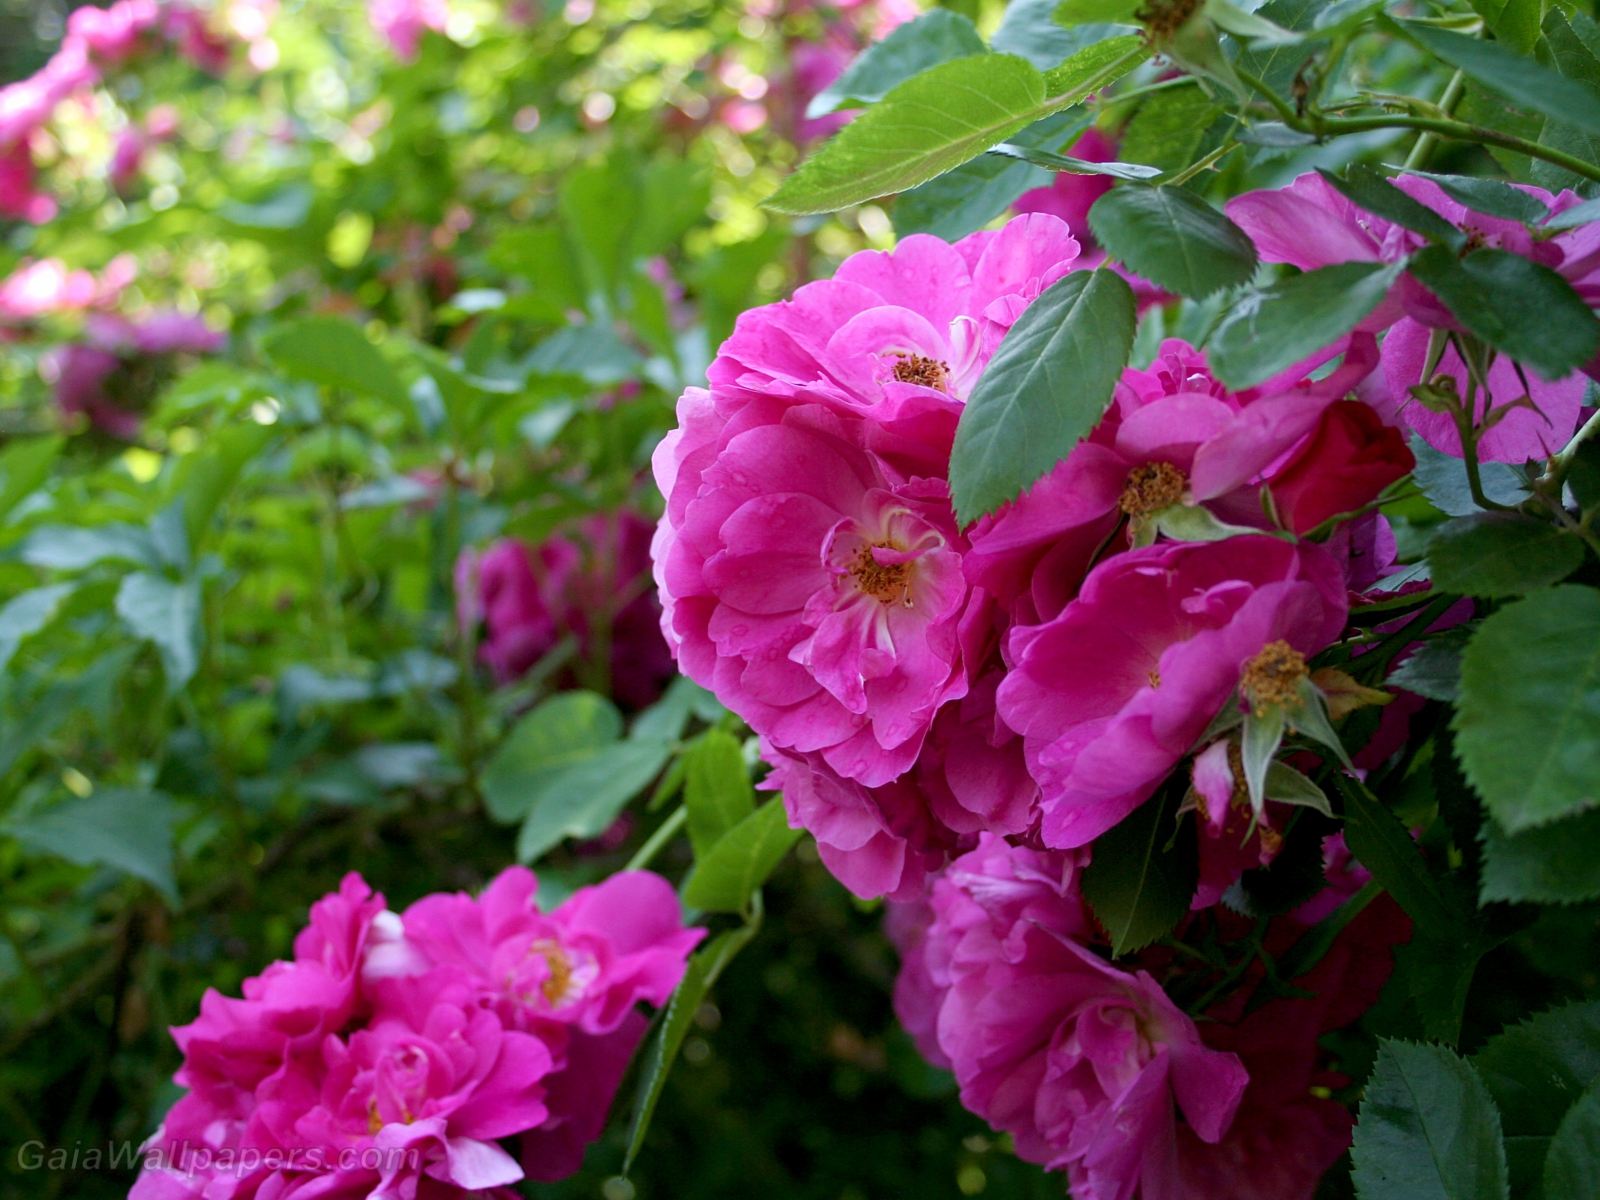 Belles roses au matin - Fonds d'écran gratuits